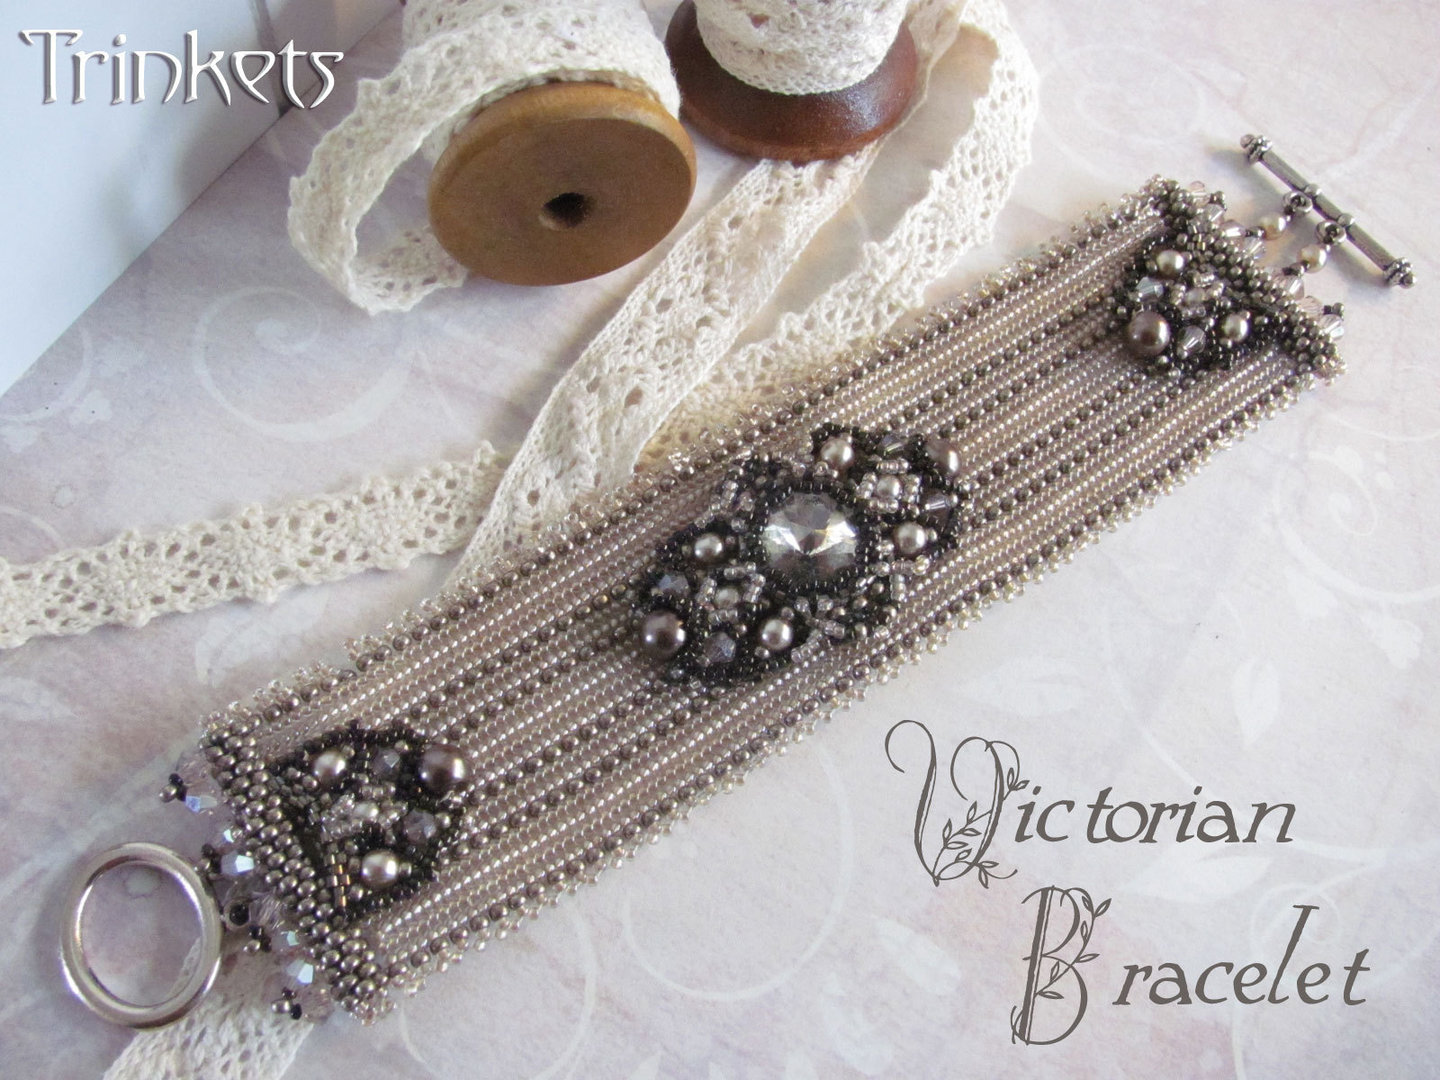 Tutorial for bracelet 'Victorian Bracelet' - English